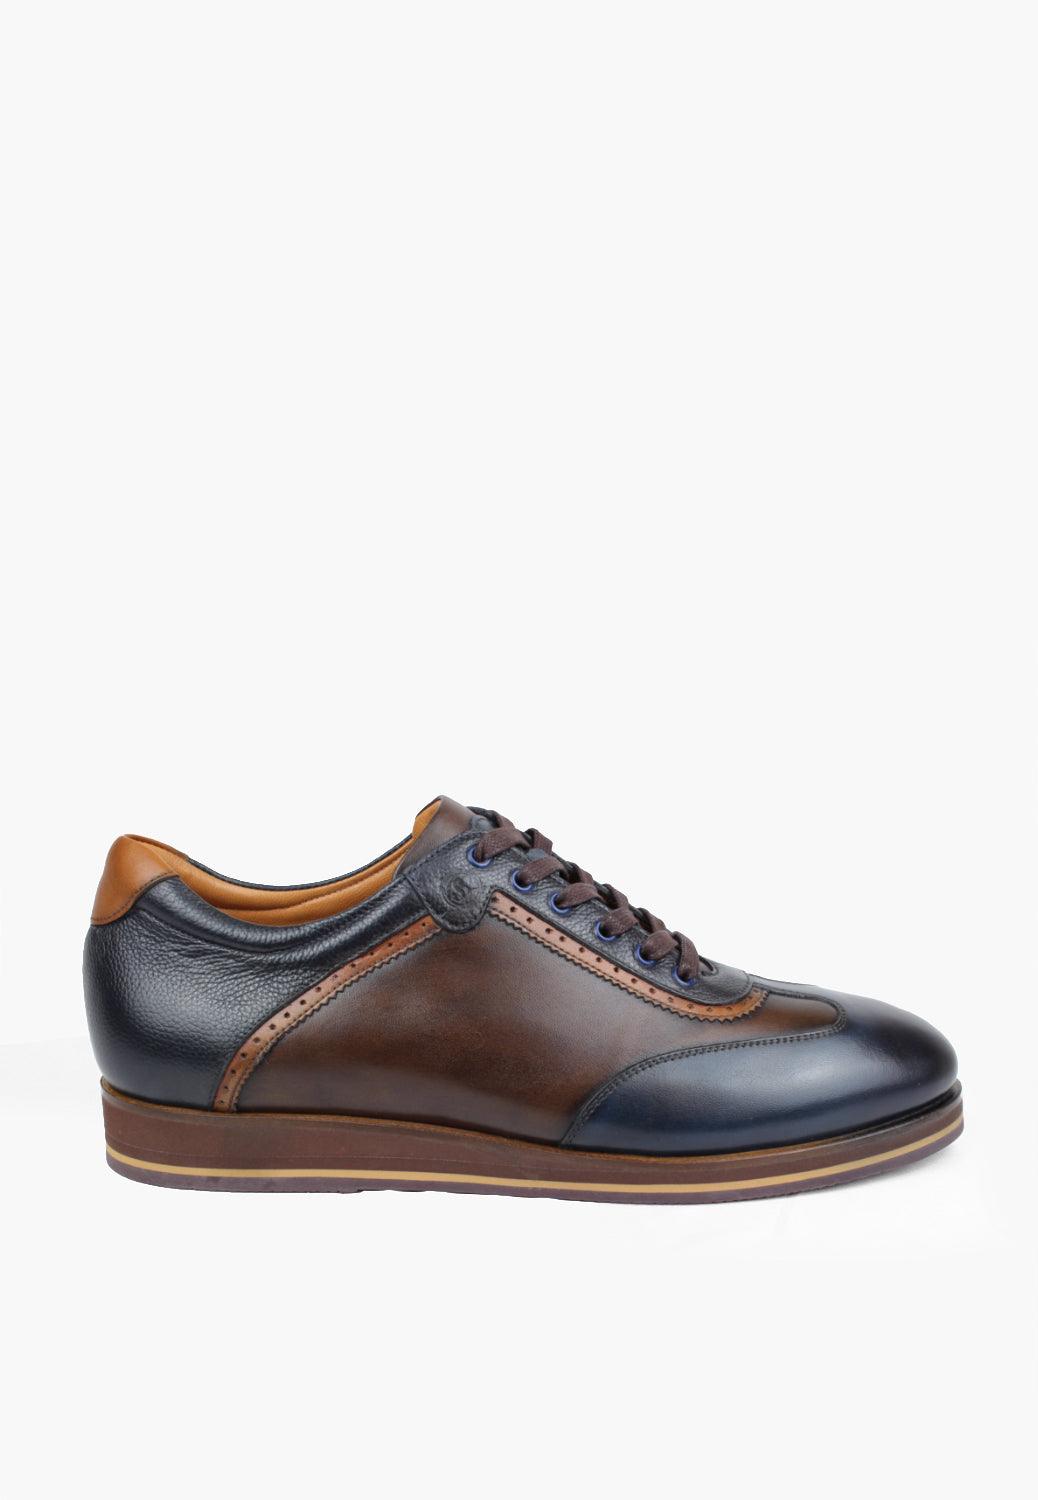 Princeton Navy Brown - SEPOL Shoes